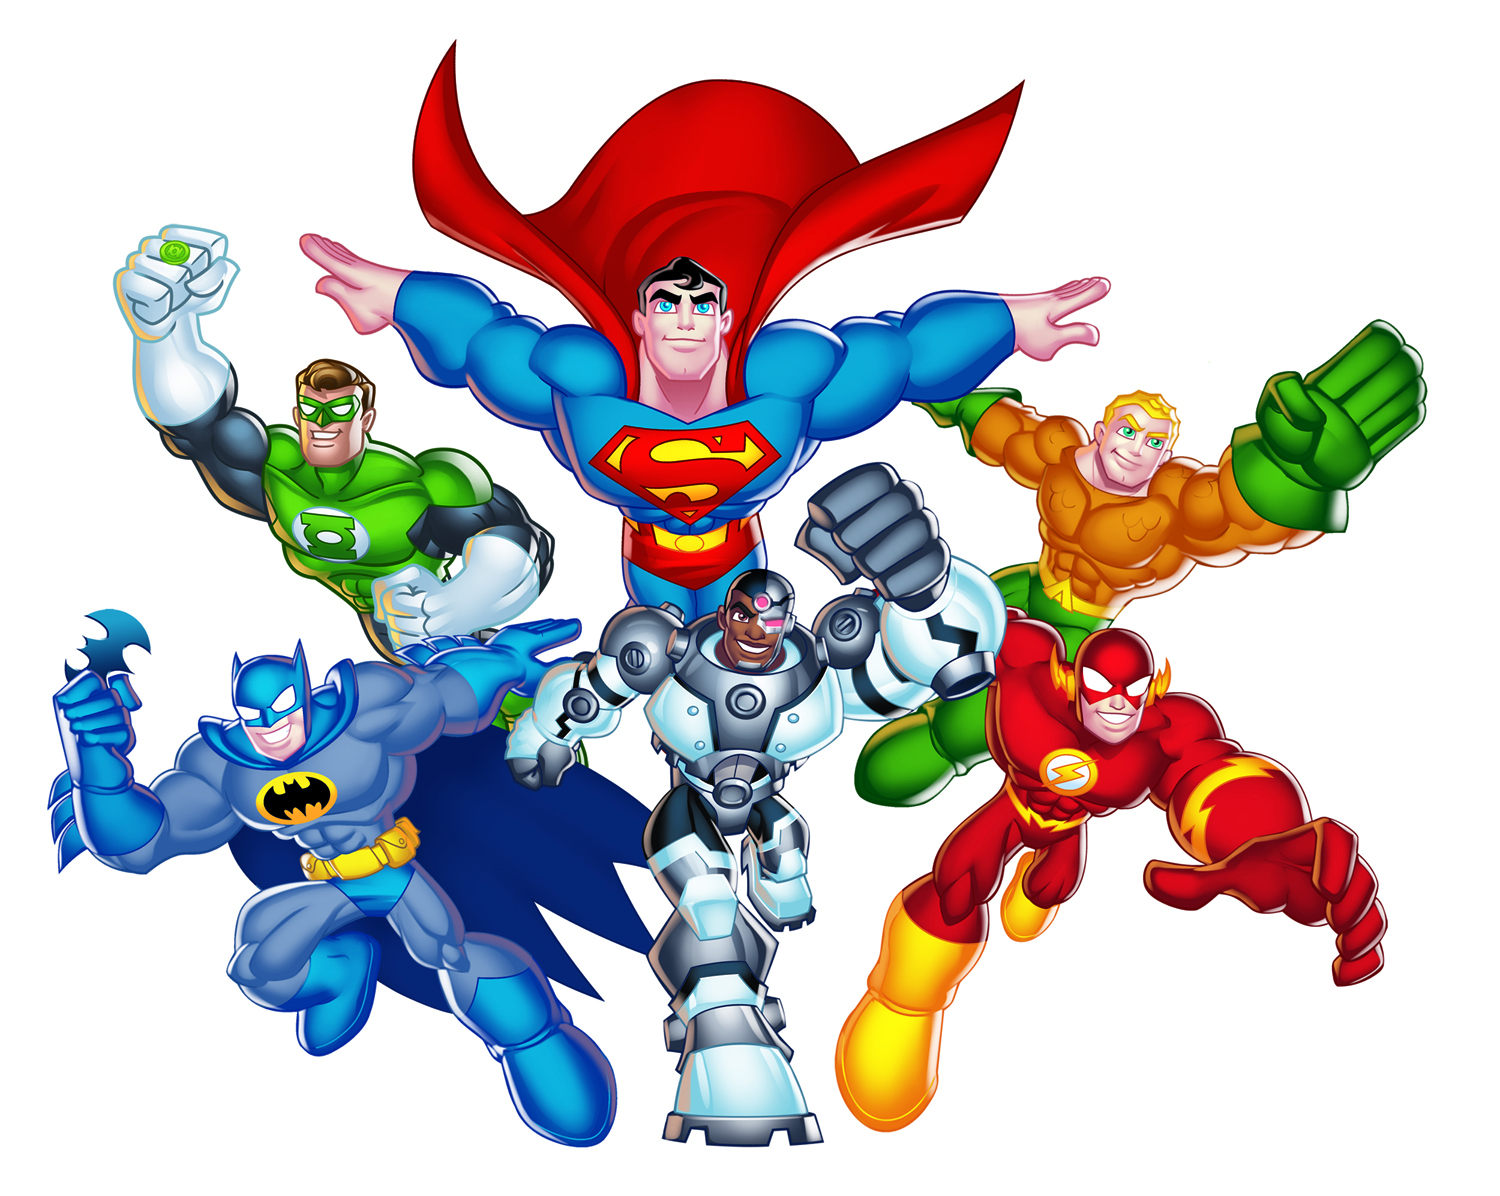 Warner Bros.' DC Super Friends Toy Line Removes Wonder Woman | TIM HANLEY